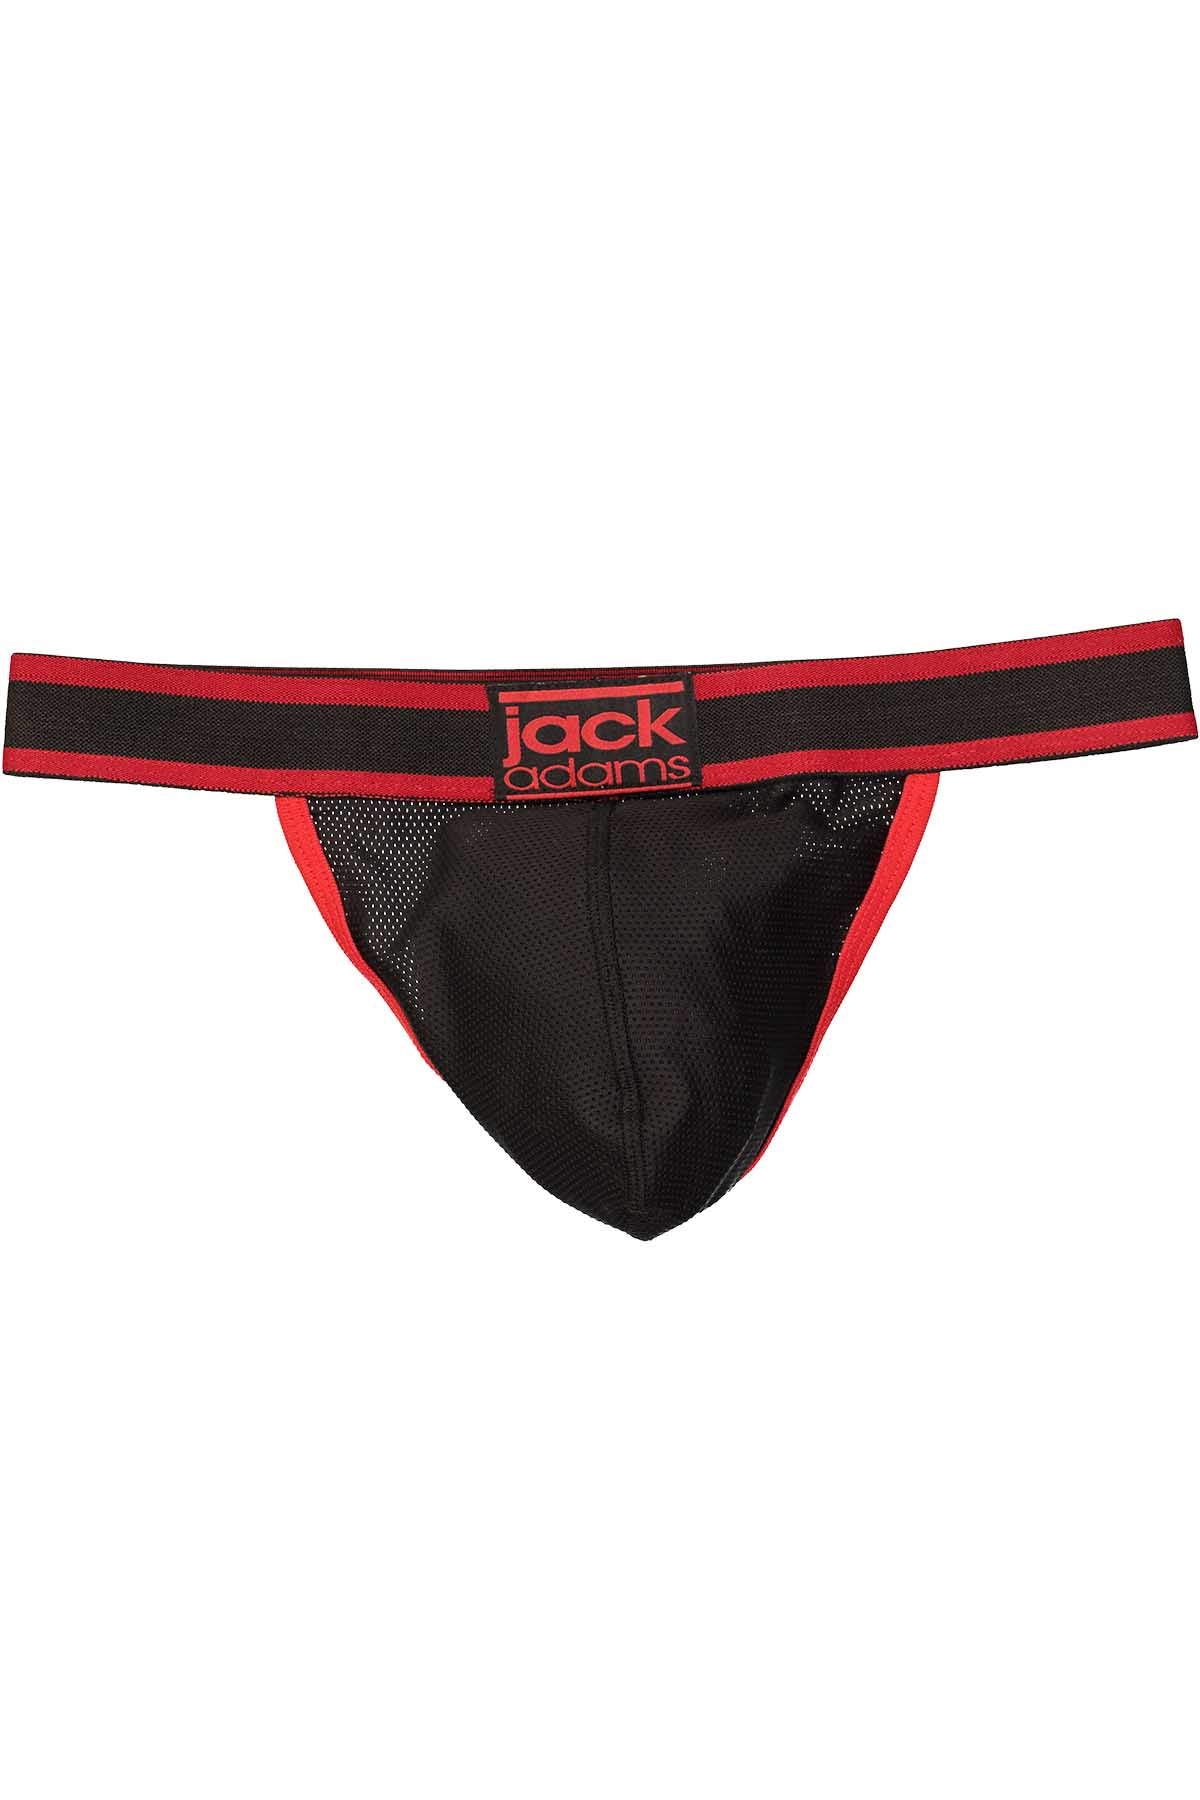 Jack Adams Black & Red Flyer Jock